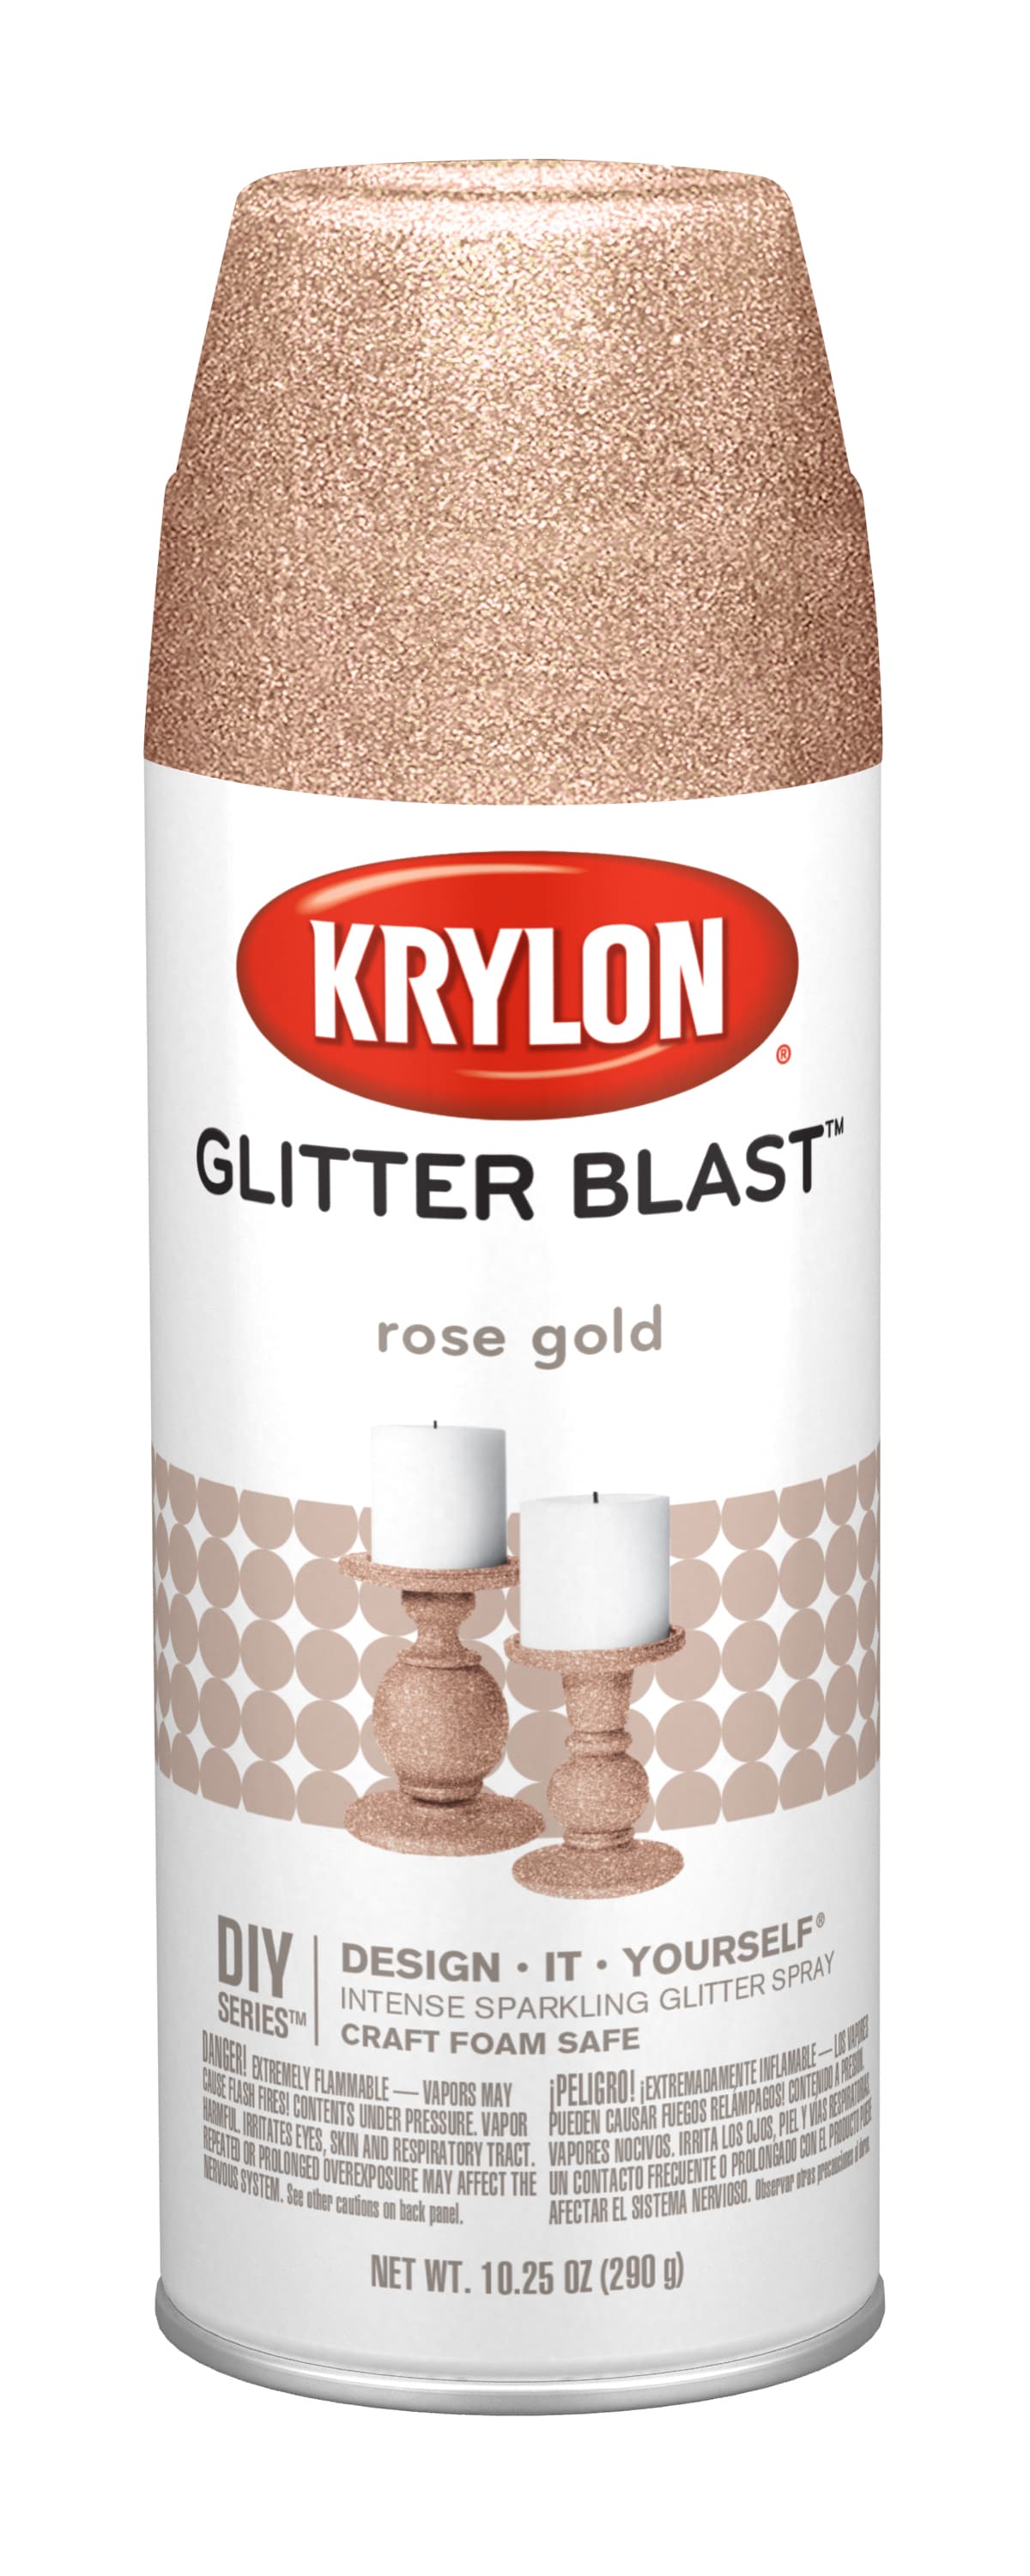 Craft Product Review: Krylon Glitter Blast Spray Paint